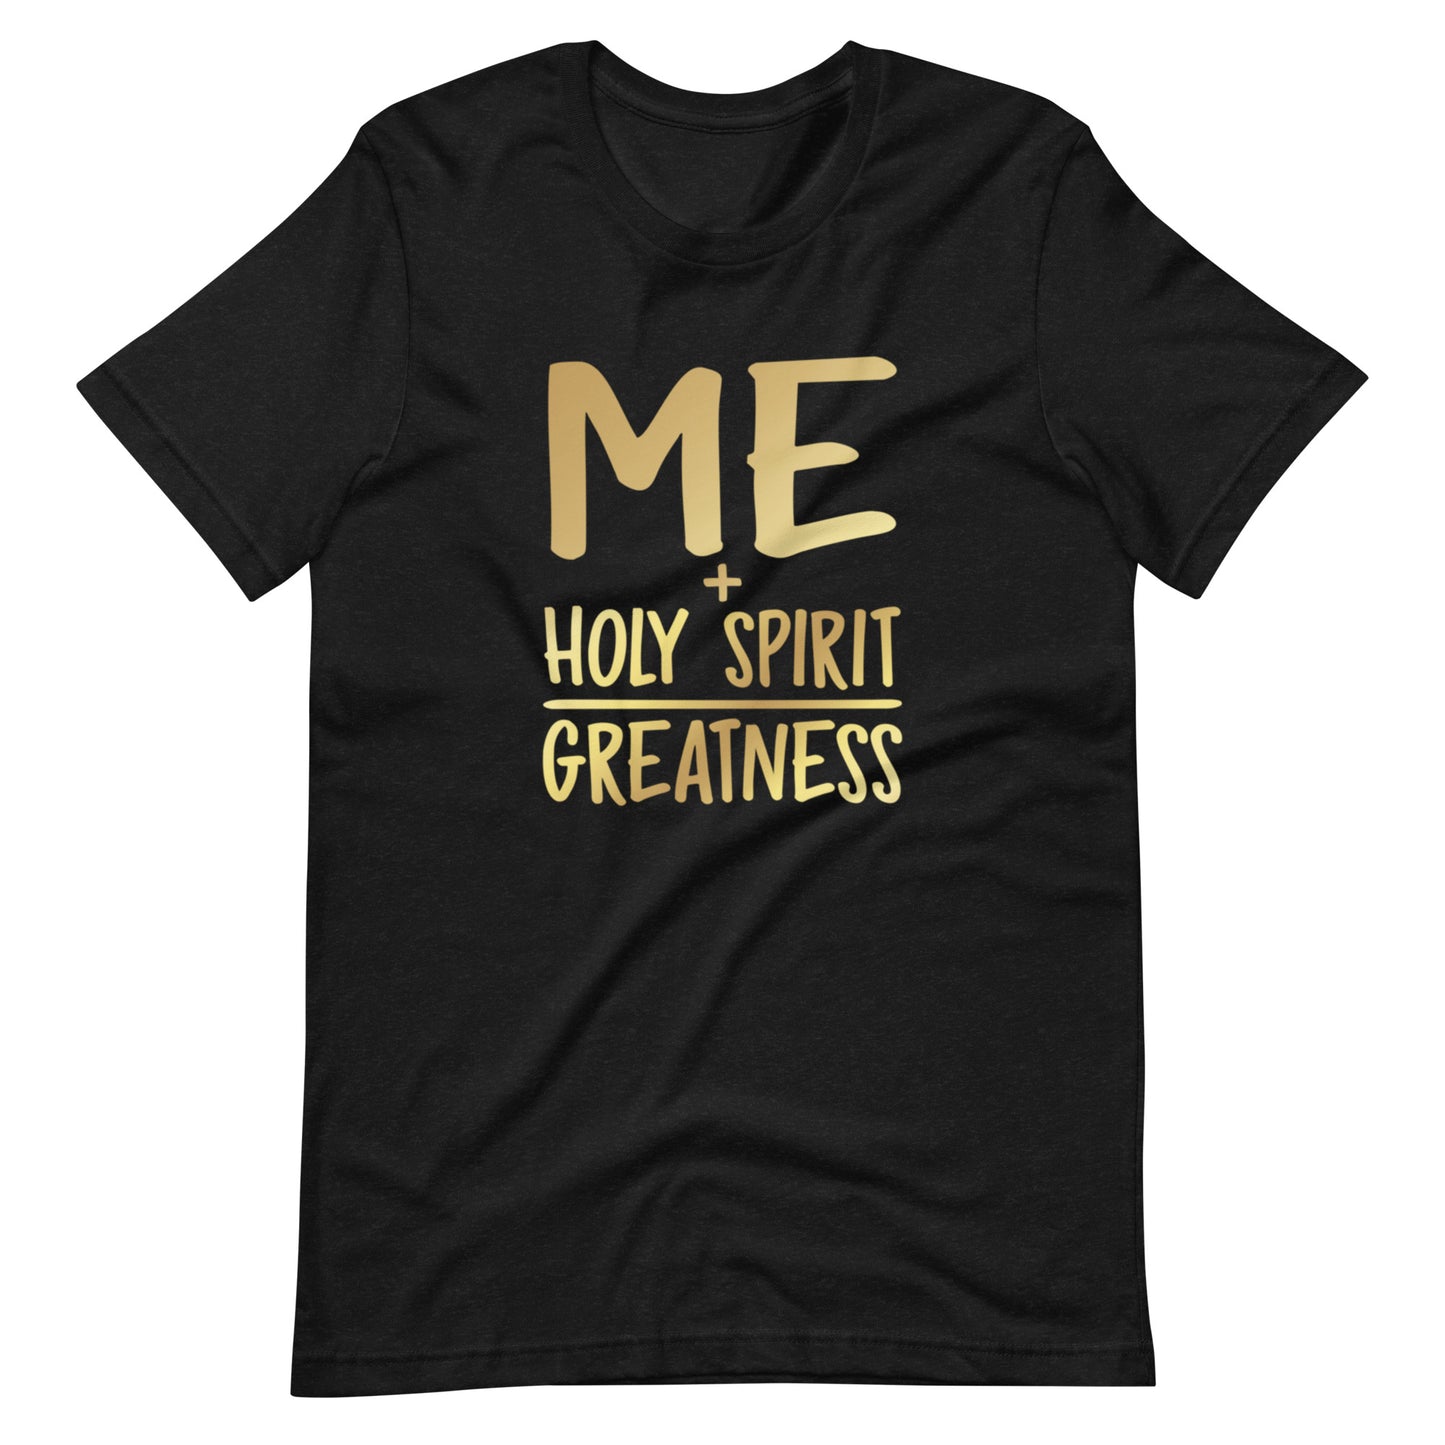 Me + HolySpirit = Greatness